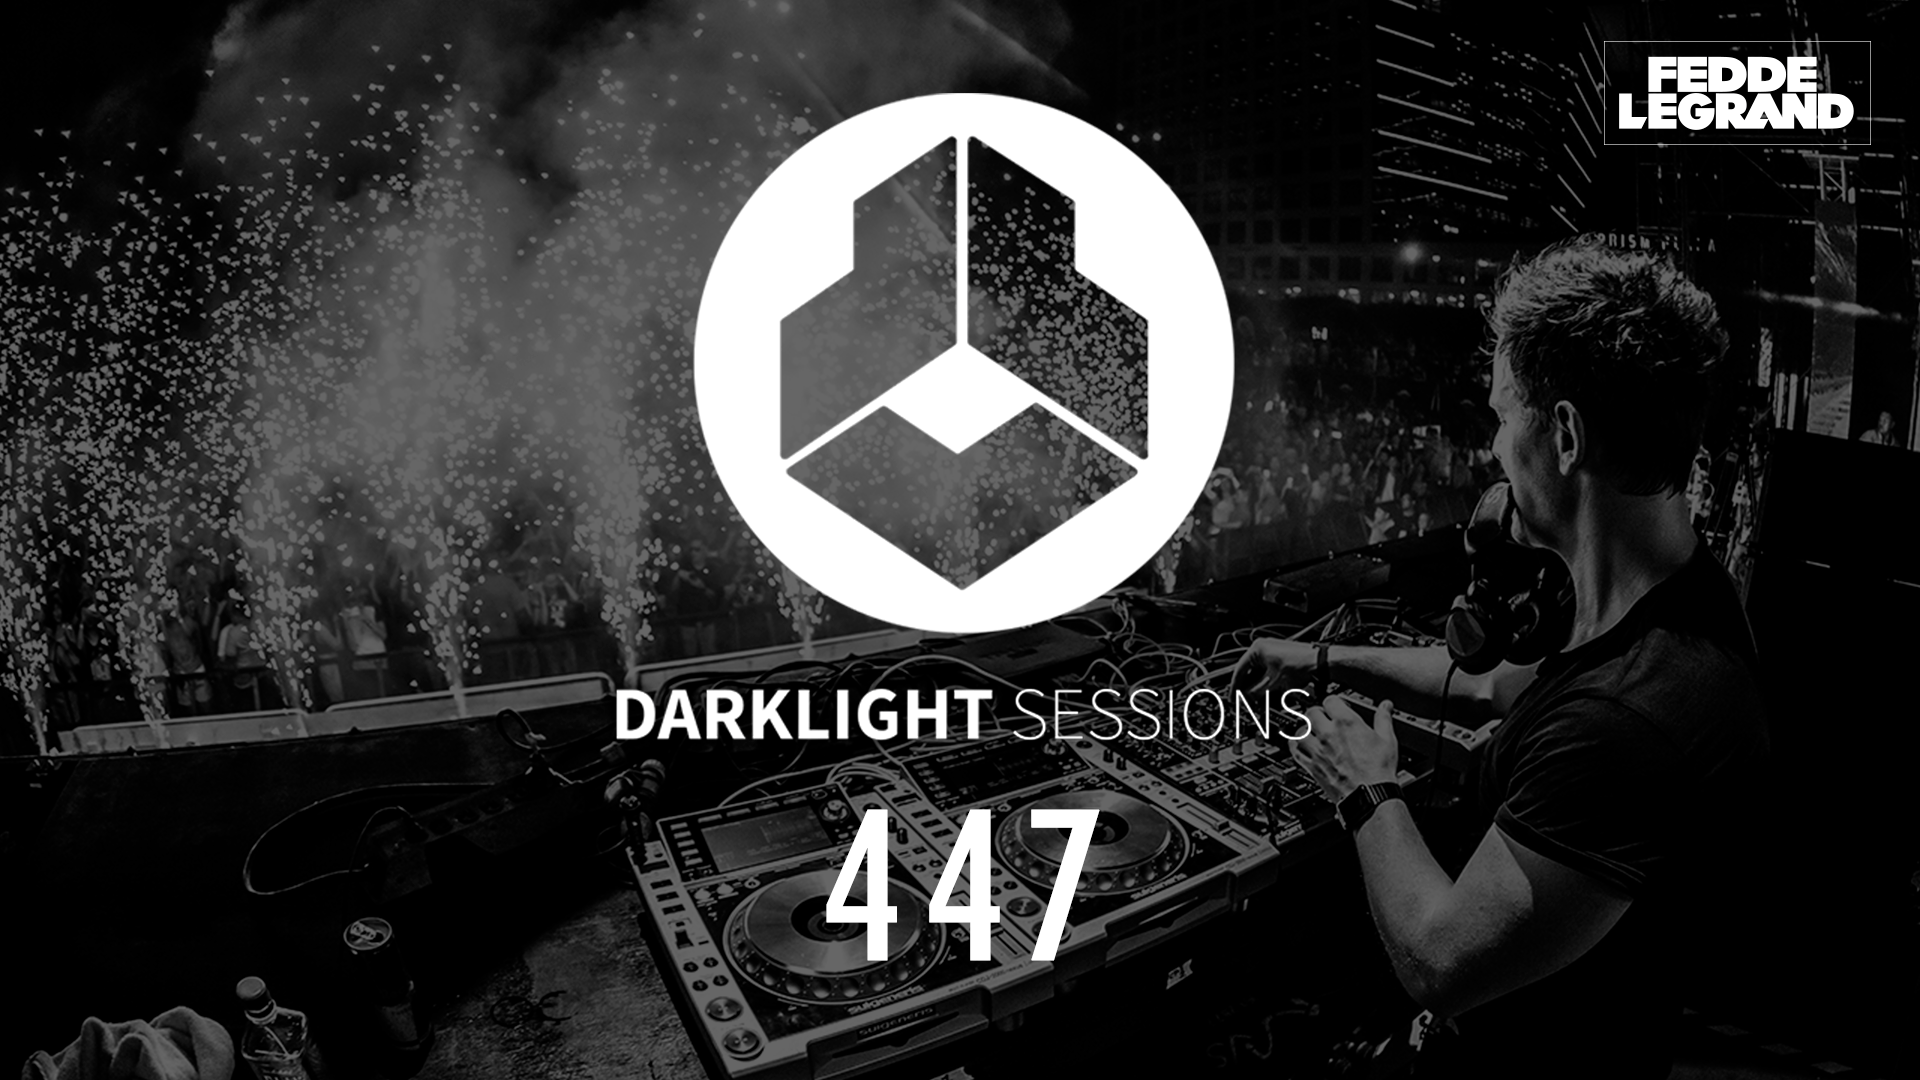 Darklight Sessions 447